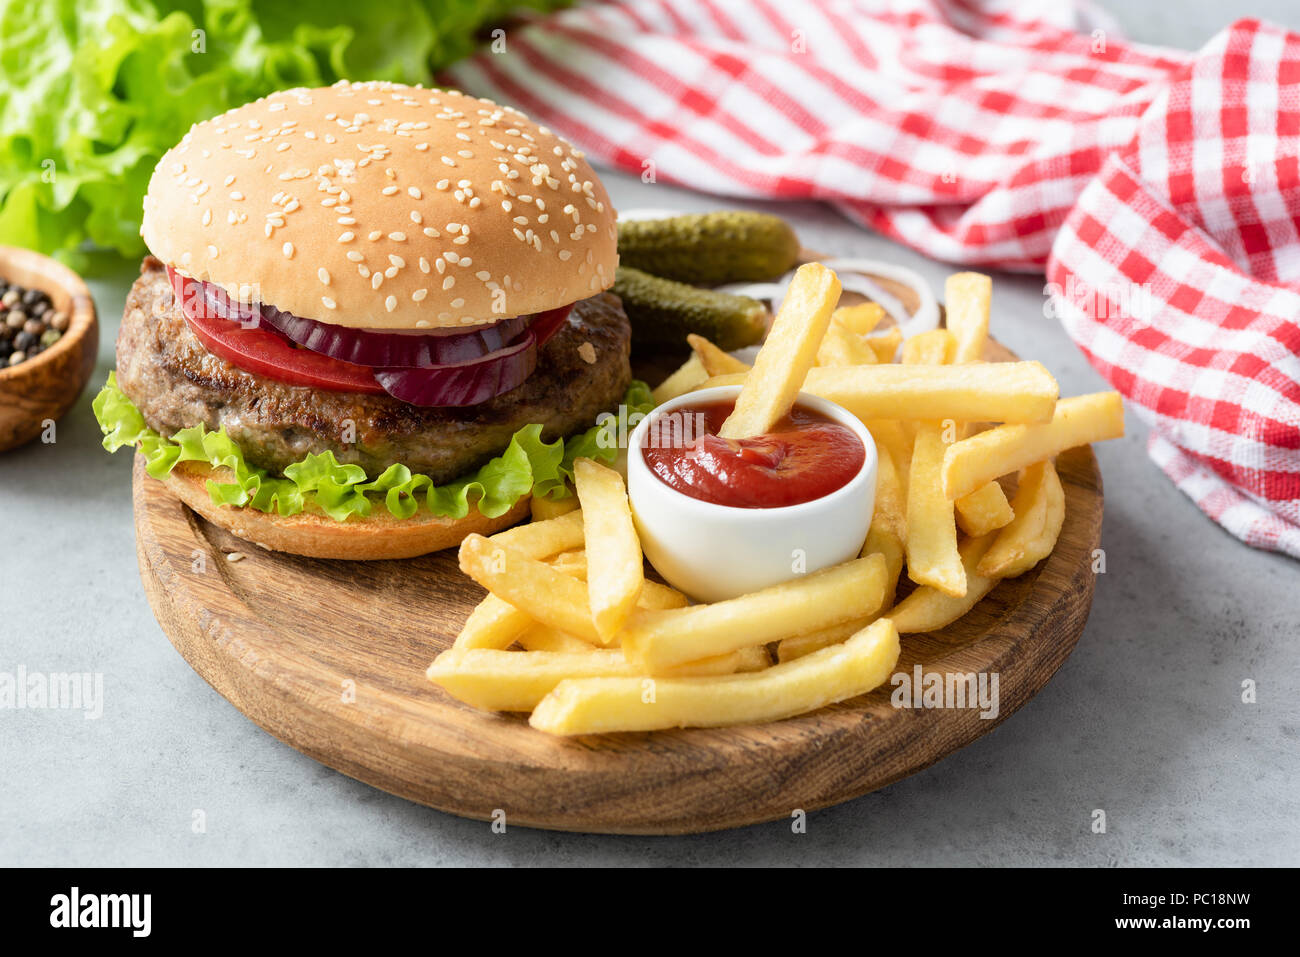 Hamburger, french fries and ketchup. Fast food concept Stock Photo